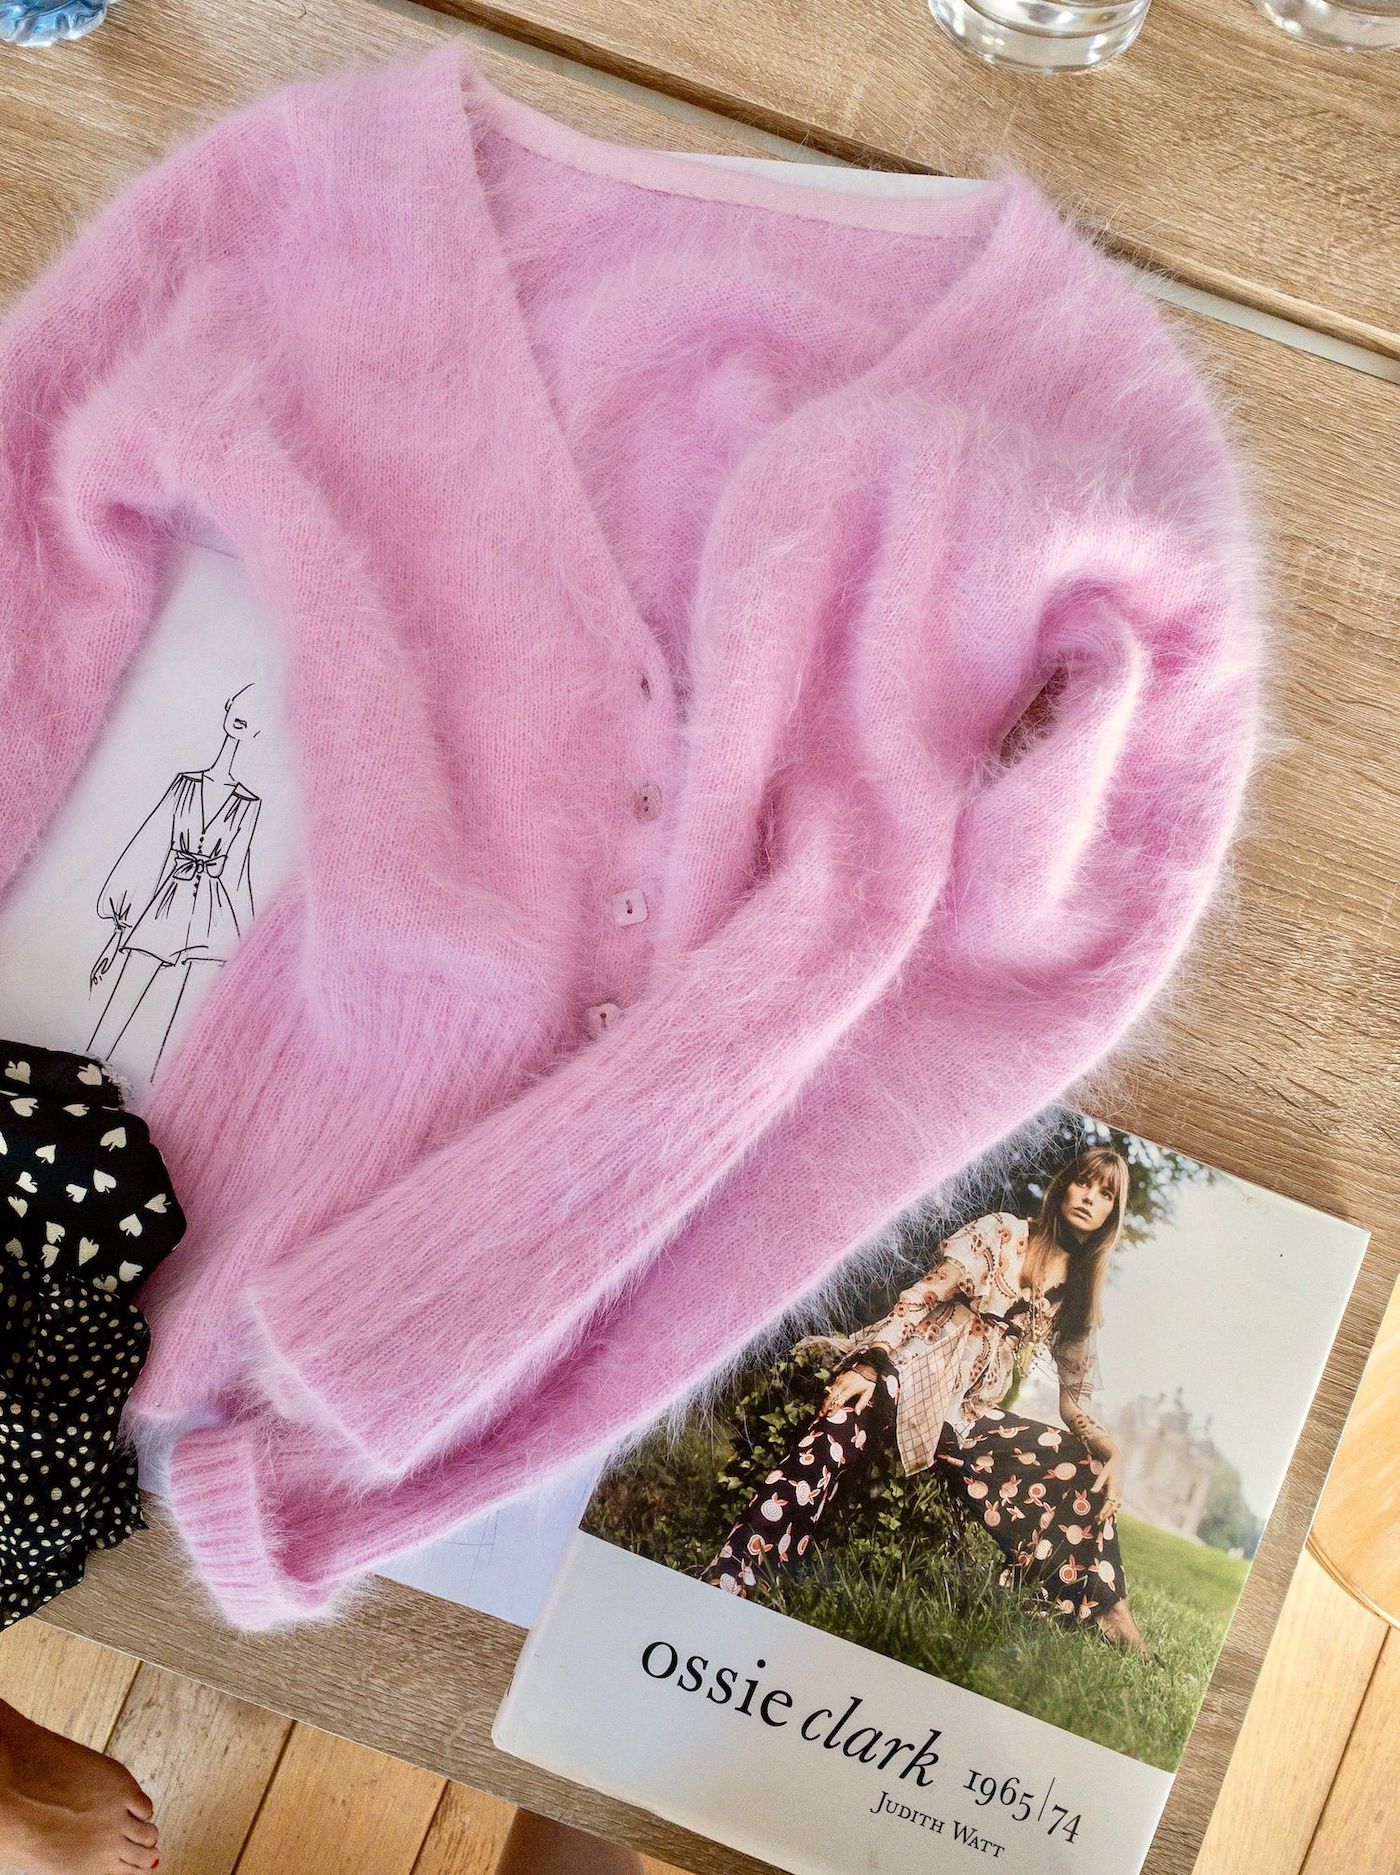 Mirae Atelier Jane Birkin Book Inspiration and 60s Sweater